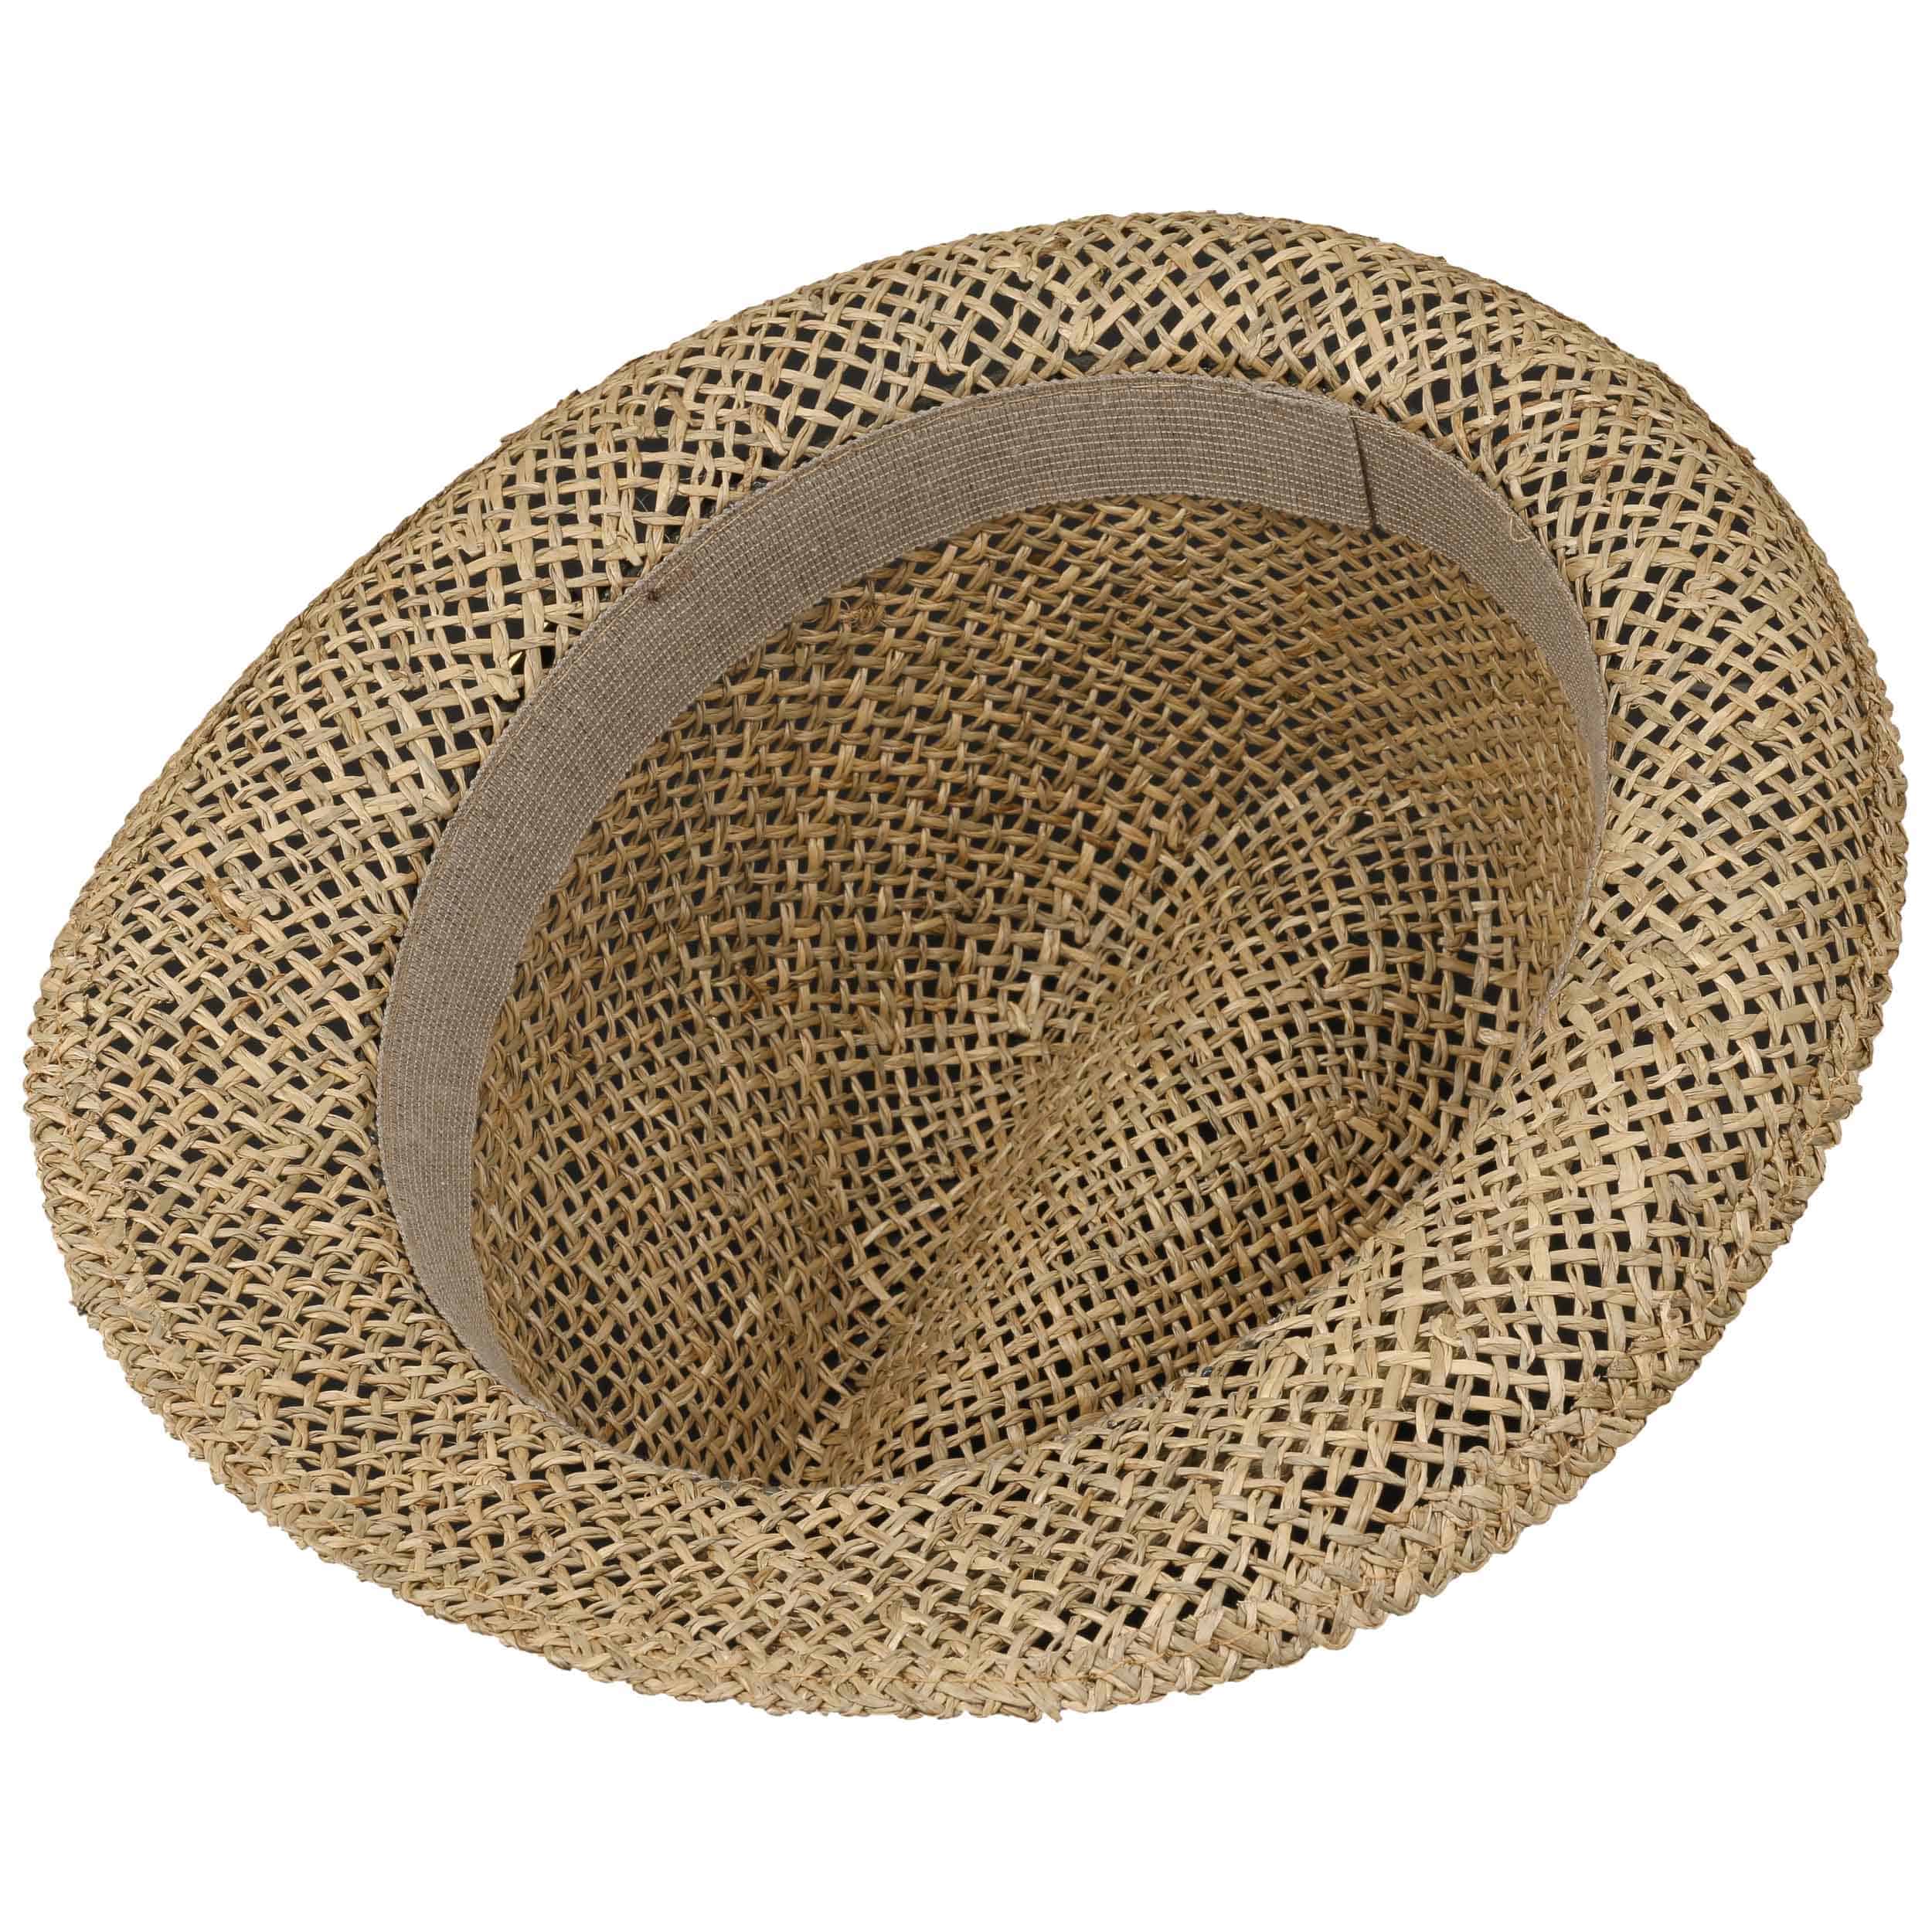 Vented Trilby Straw Hat by Lipodo - 26,95